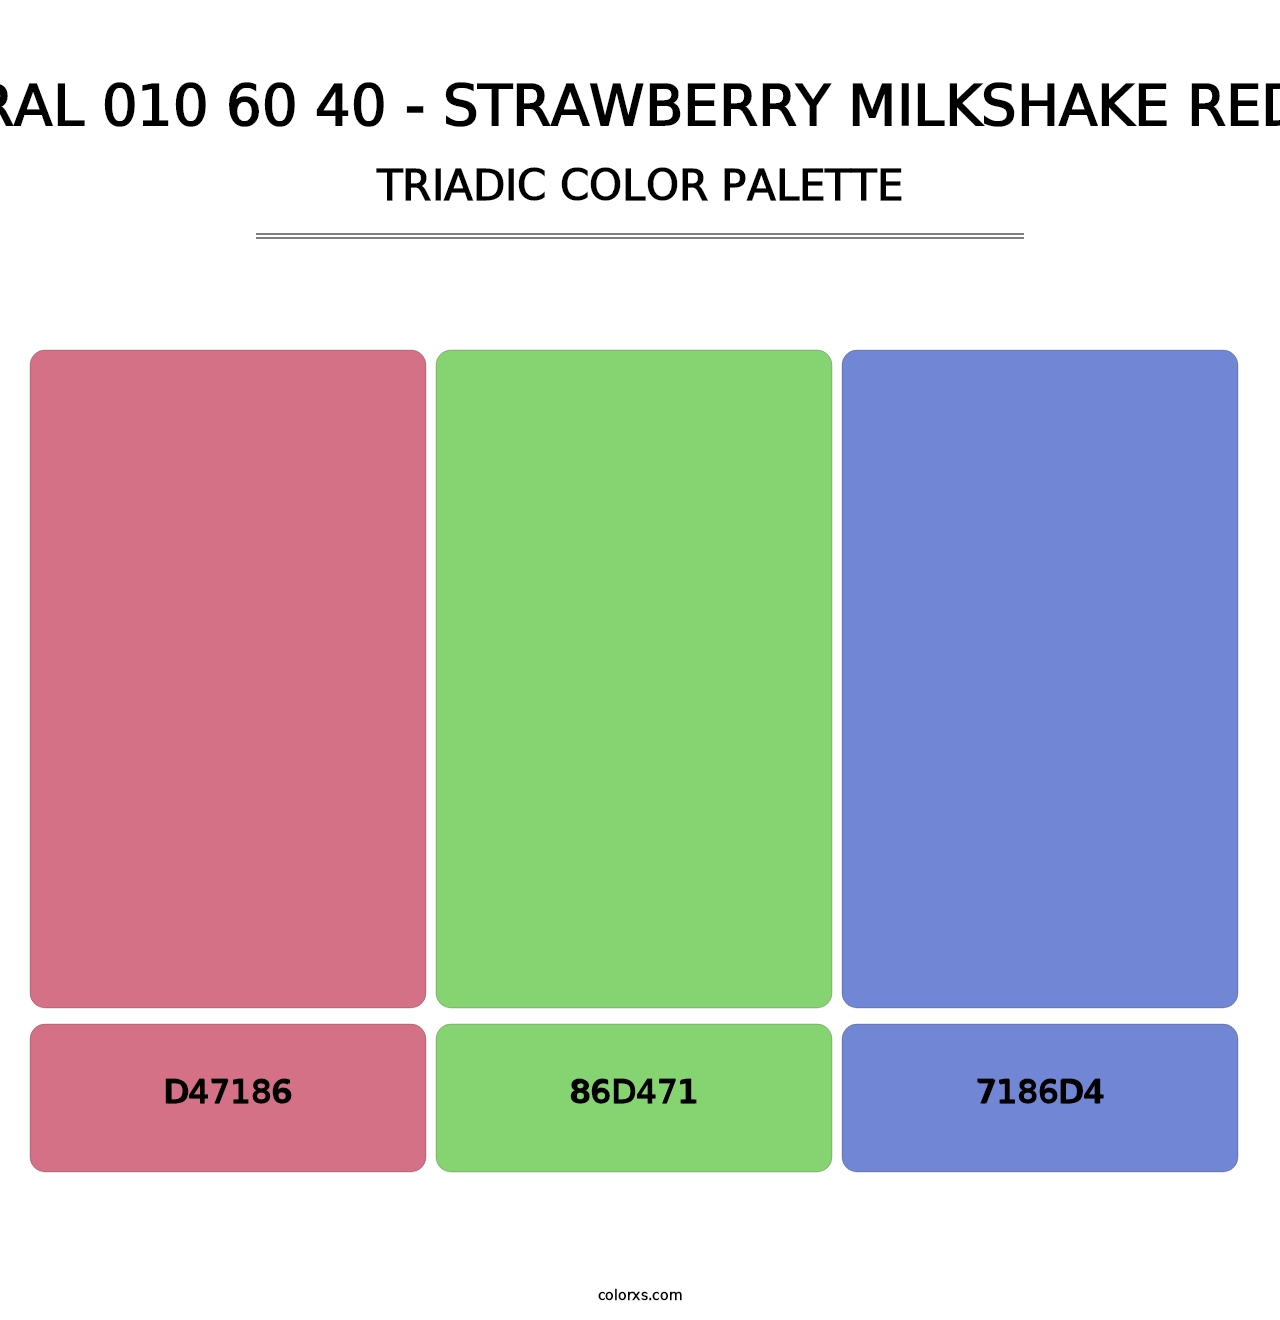 RAL 010 60 40 - Strawberry Milkshake Red - Triadic Color Palette